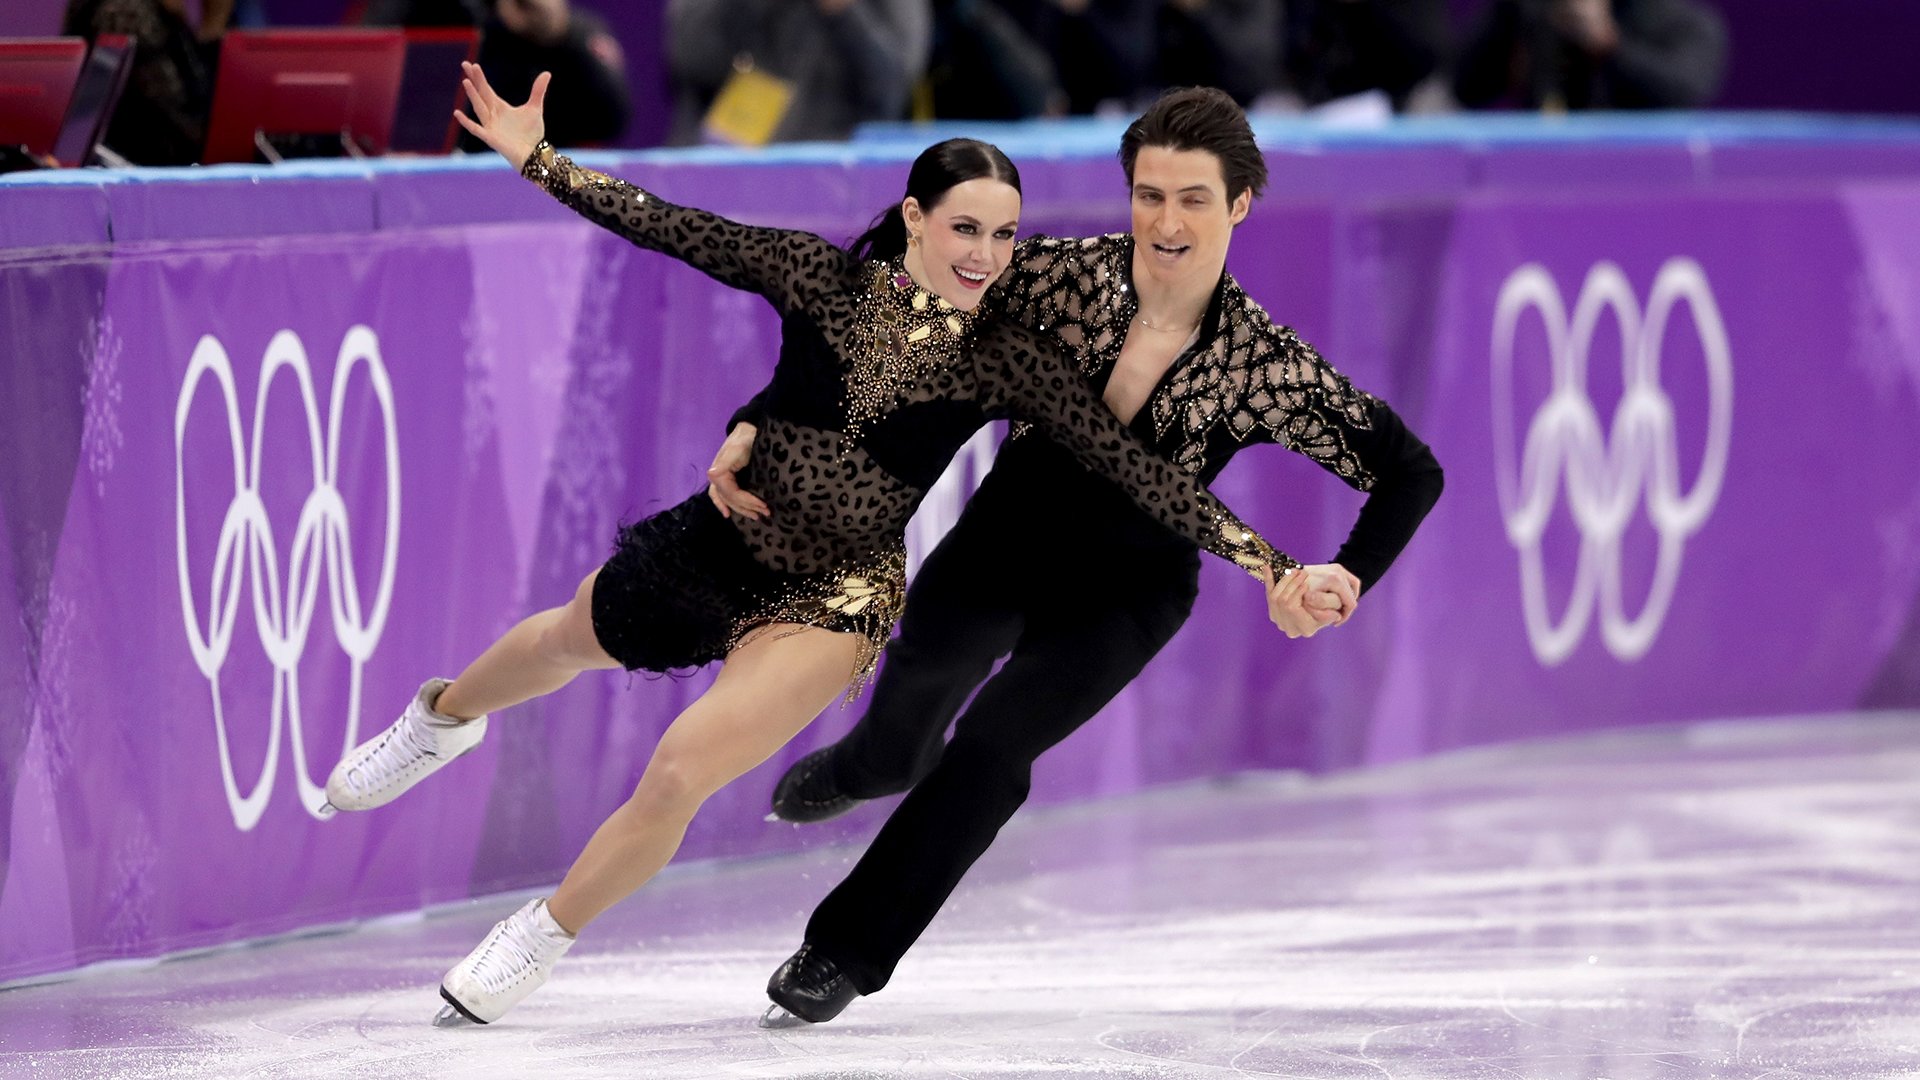 Правдивое фигурное. Тесса Вертью и Скотт Моир на Олимпиаде в Корее 2018. Тесса Виртью и Скотт Мойр Гран при Канада.